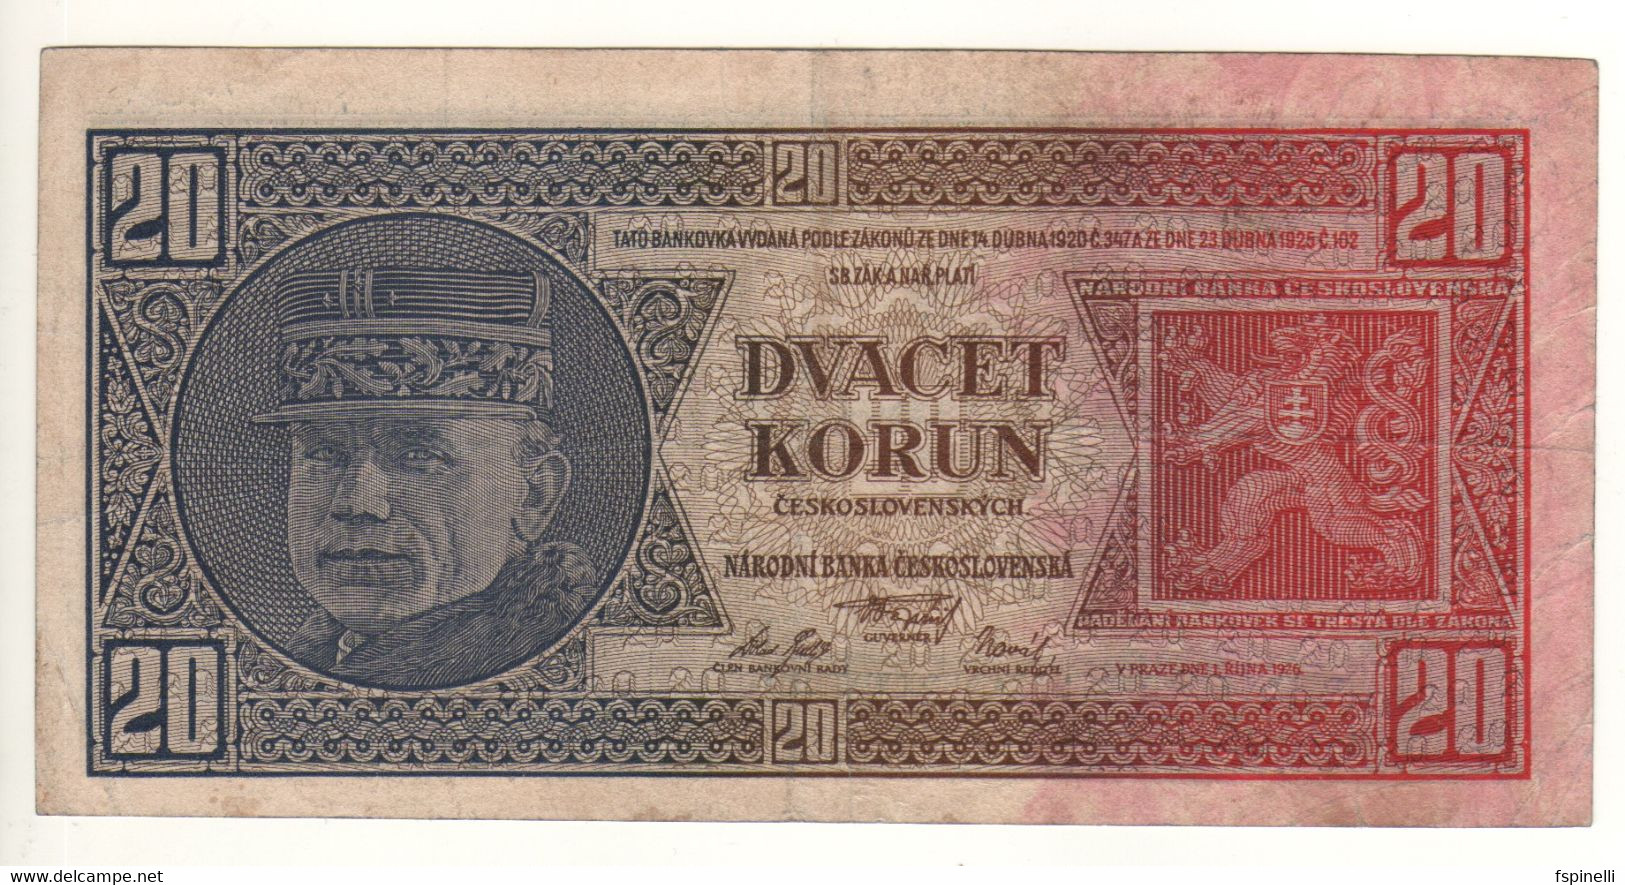 CZECHOSLOVAKIA   20 Korun   P21a    (1926  - General Milan Rastislav Stefánik / Dr. Alois Rasin ) - Tchécoslovaquie